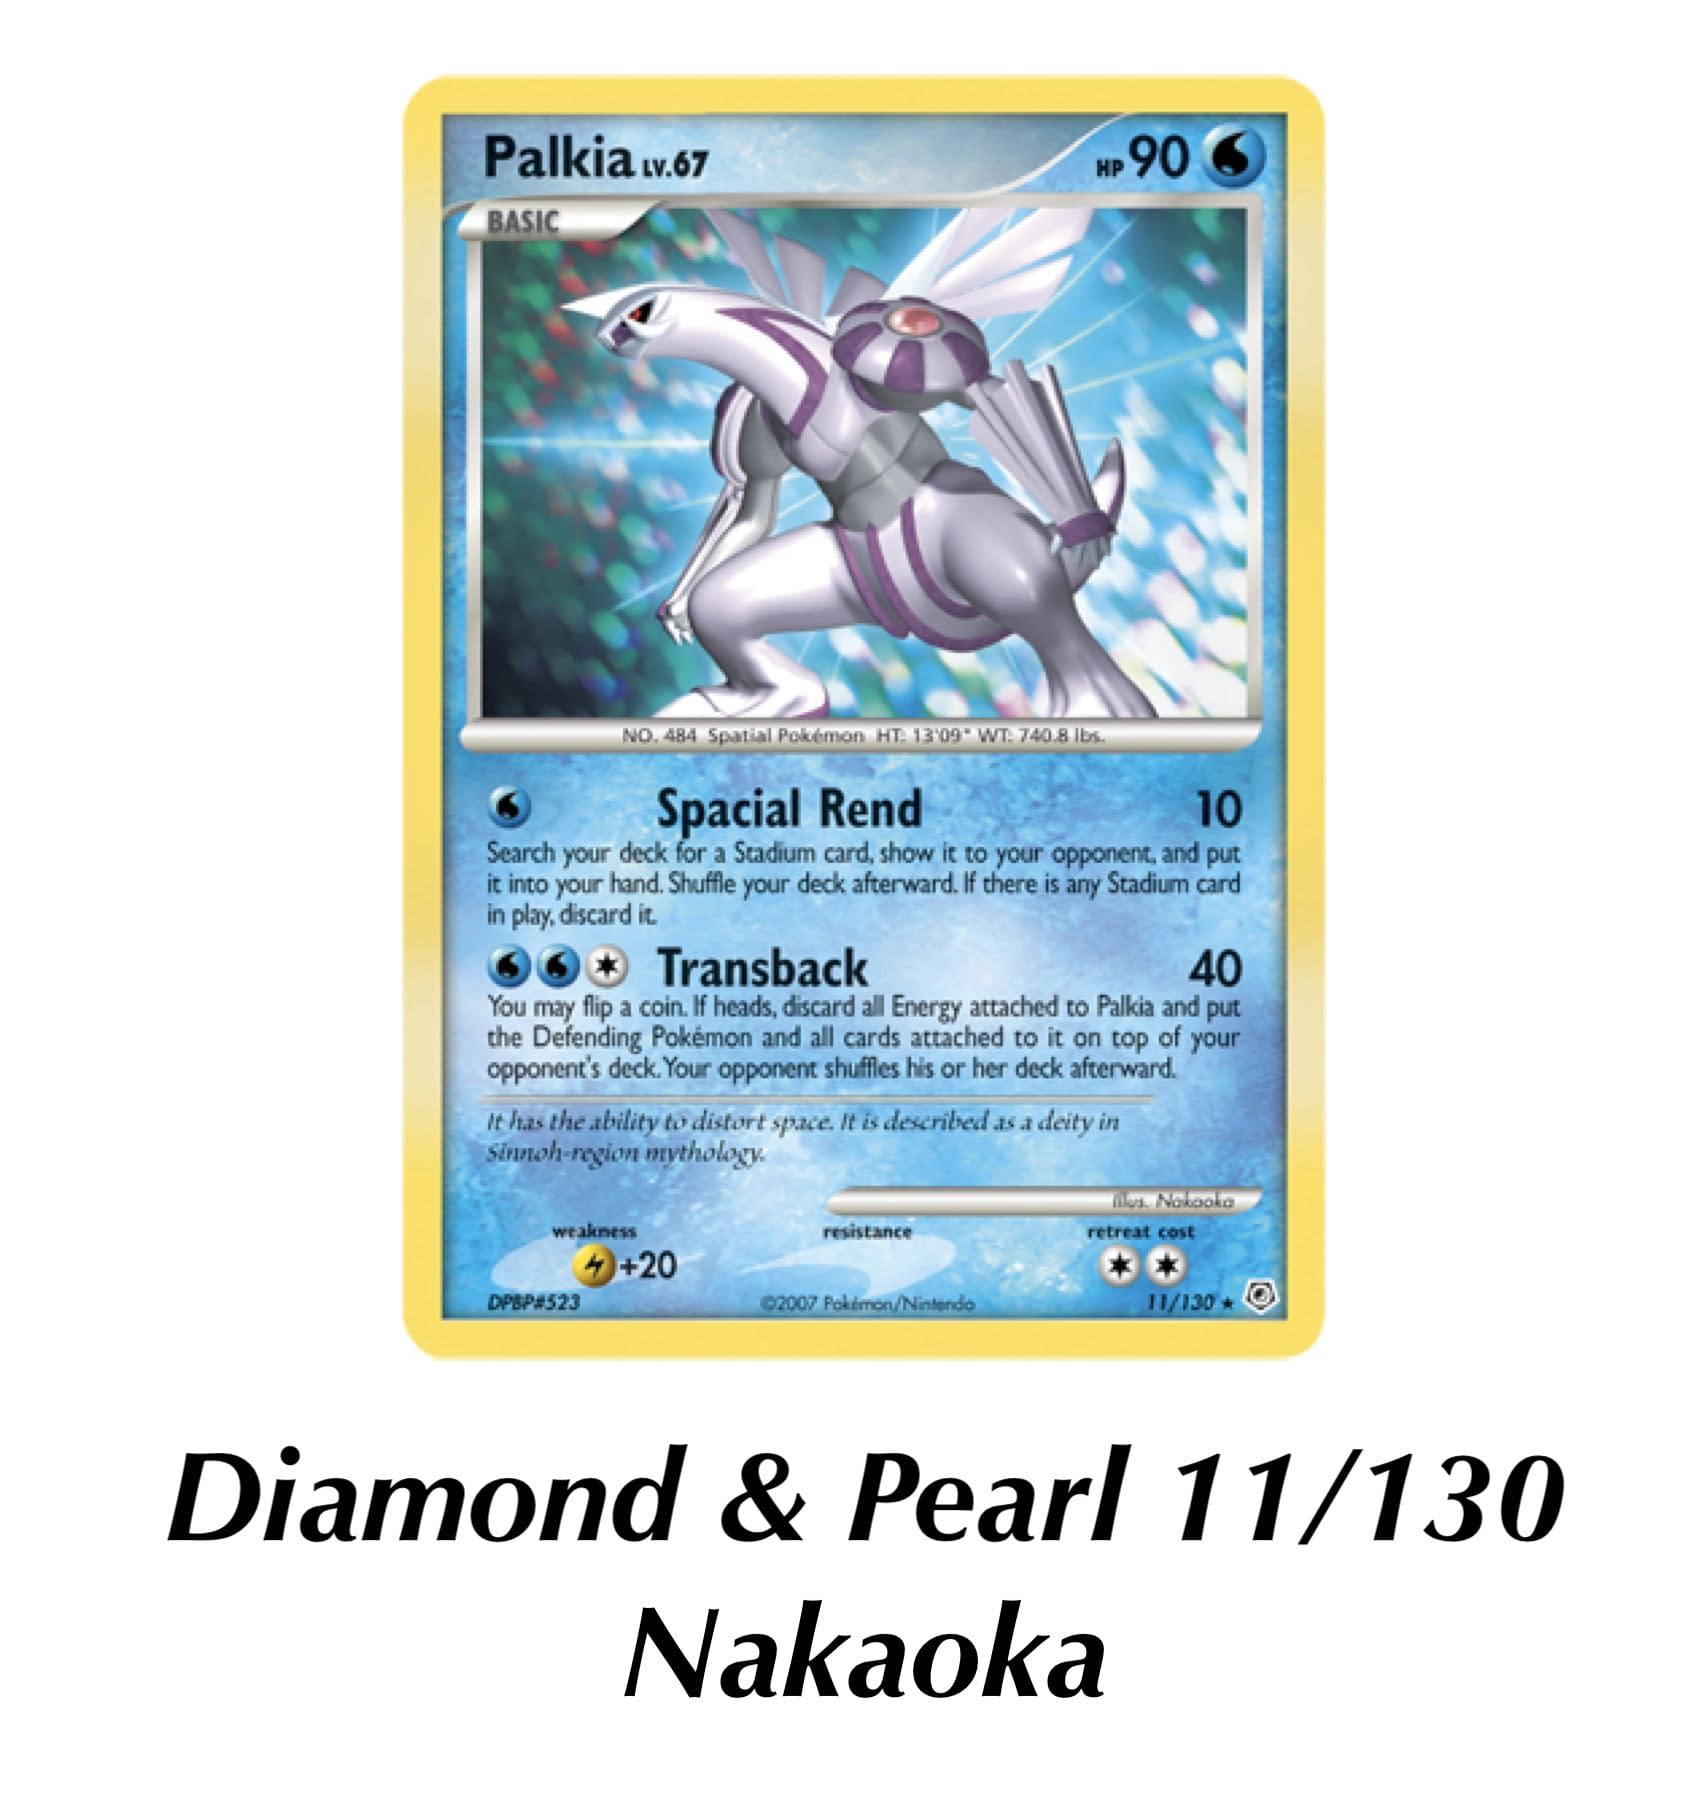 Is Palkia worth using in Pokemon GO?